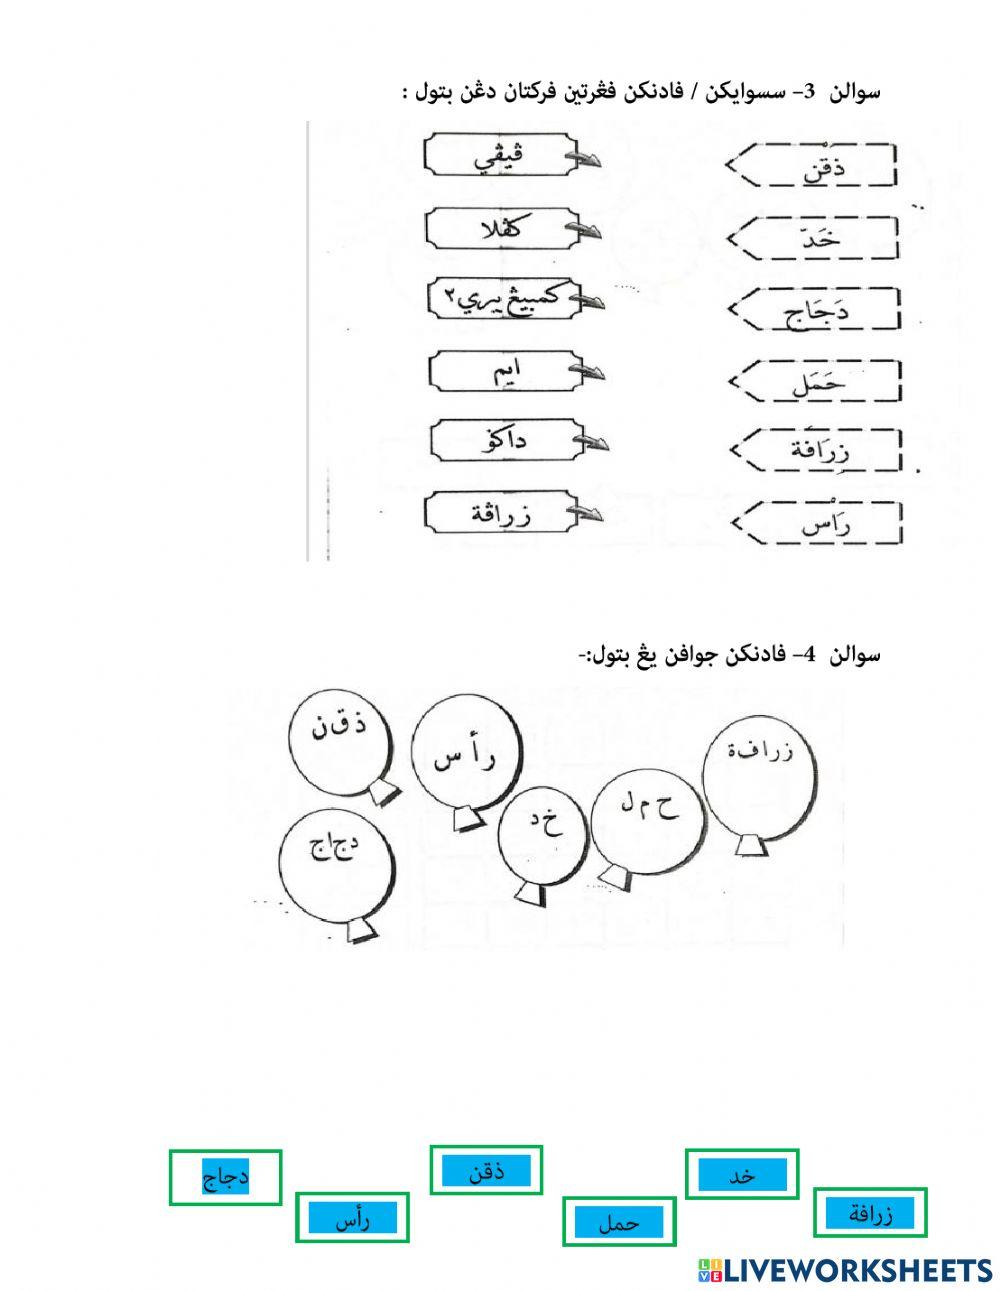 Ulangkaji bahasa arab dh pra